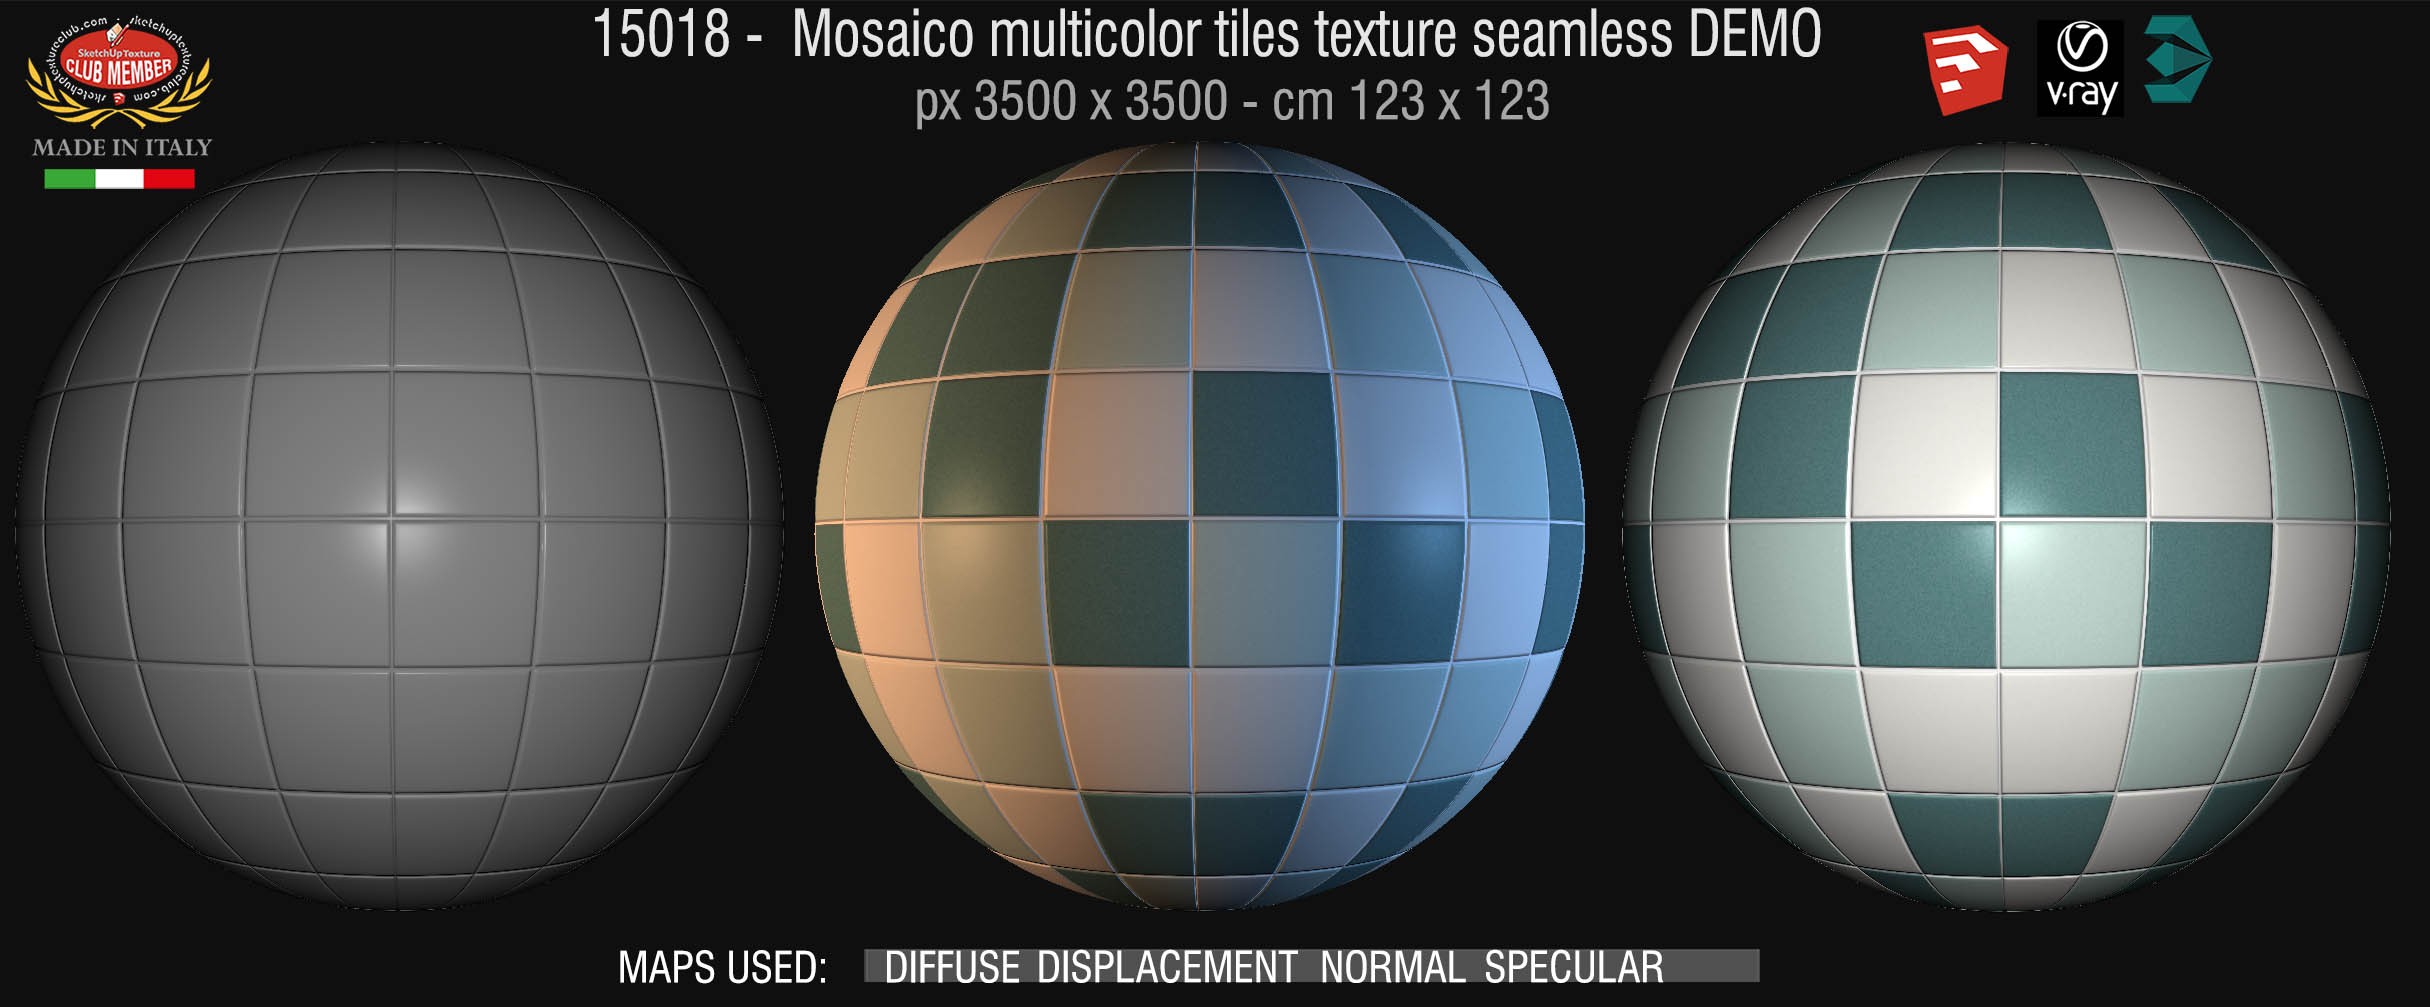 15018 Mosaico multicolor tiles texture seamless + maps DEMO